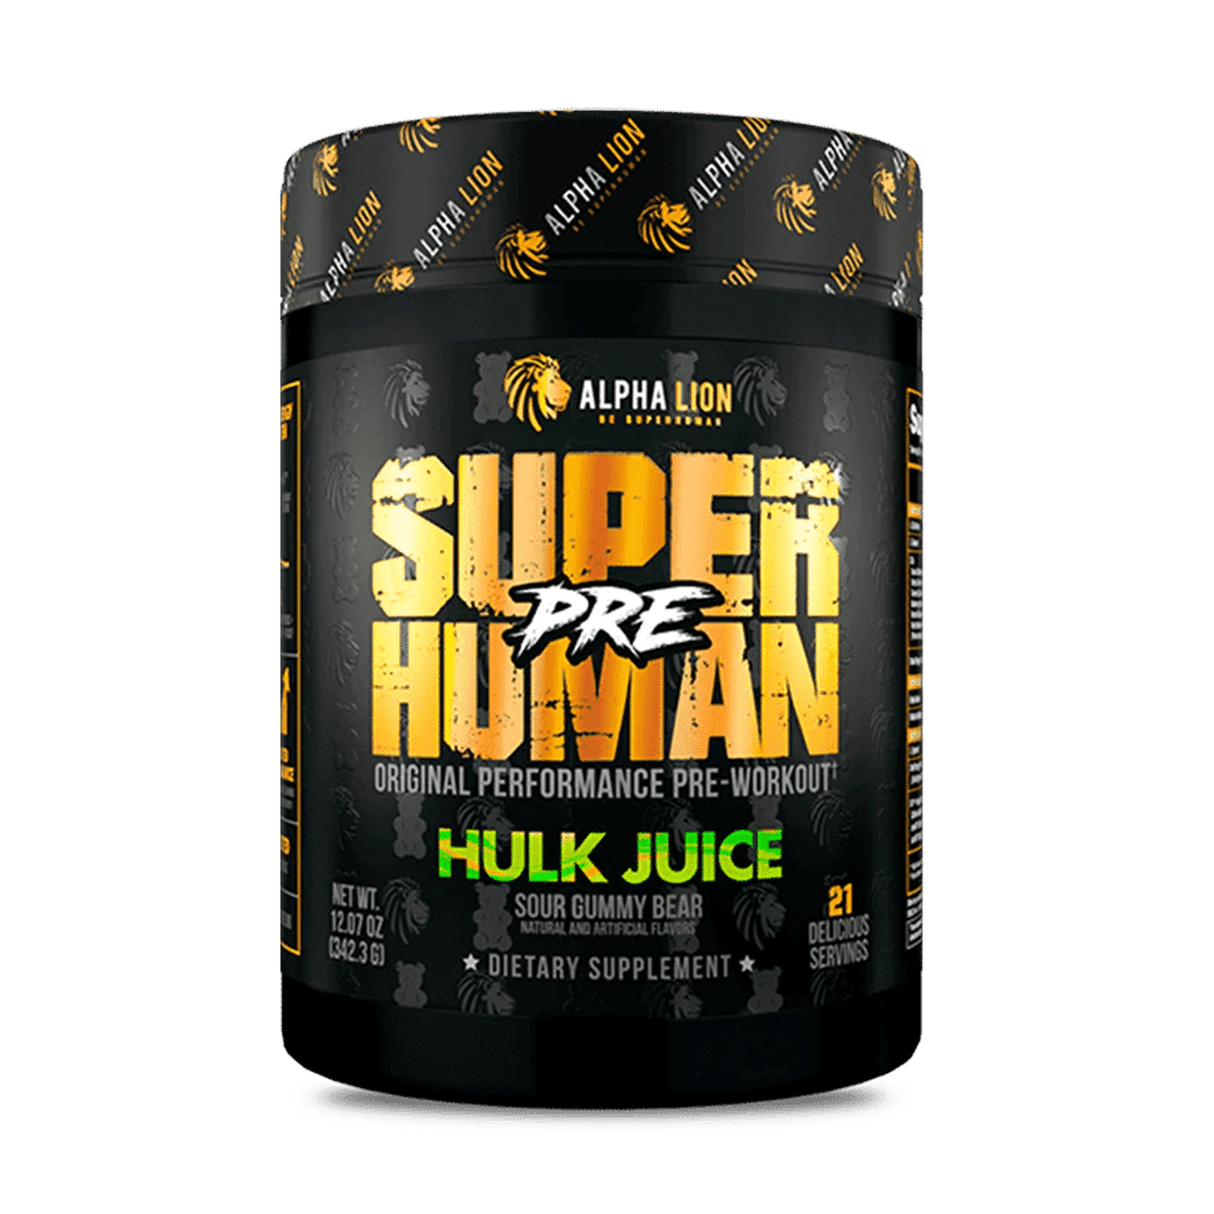 SUPERHUMAN PRE - Muscle Factory, LLC